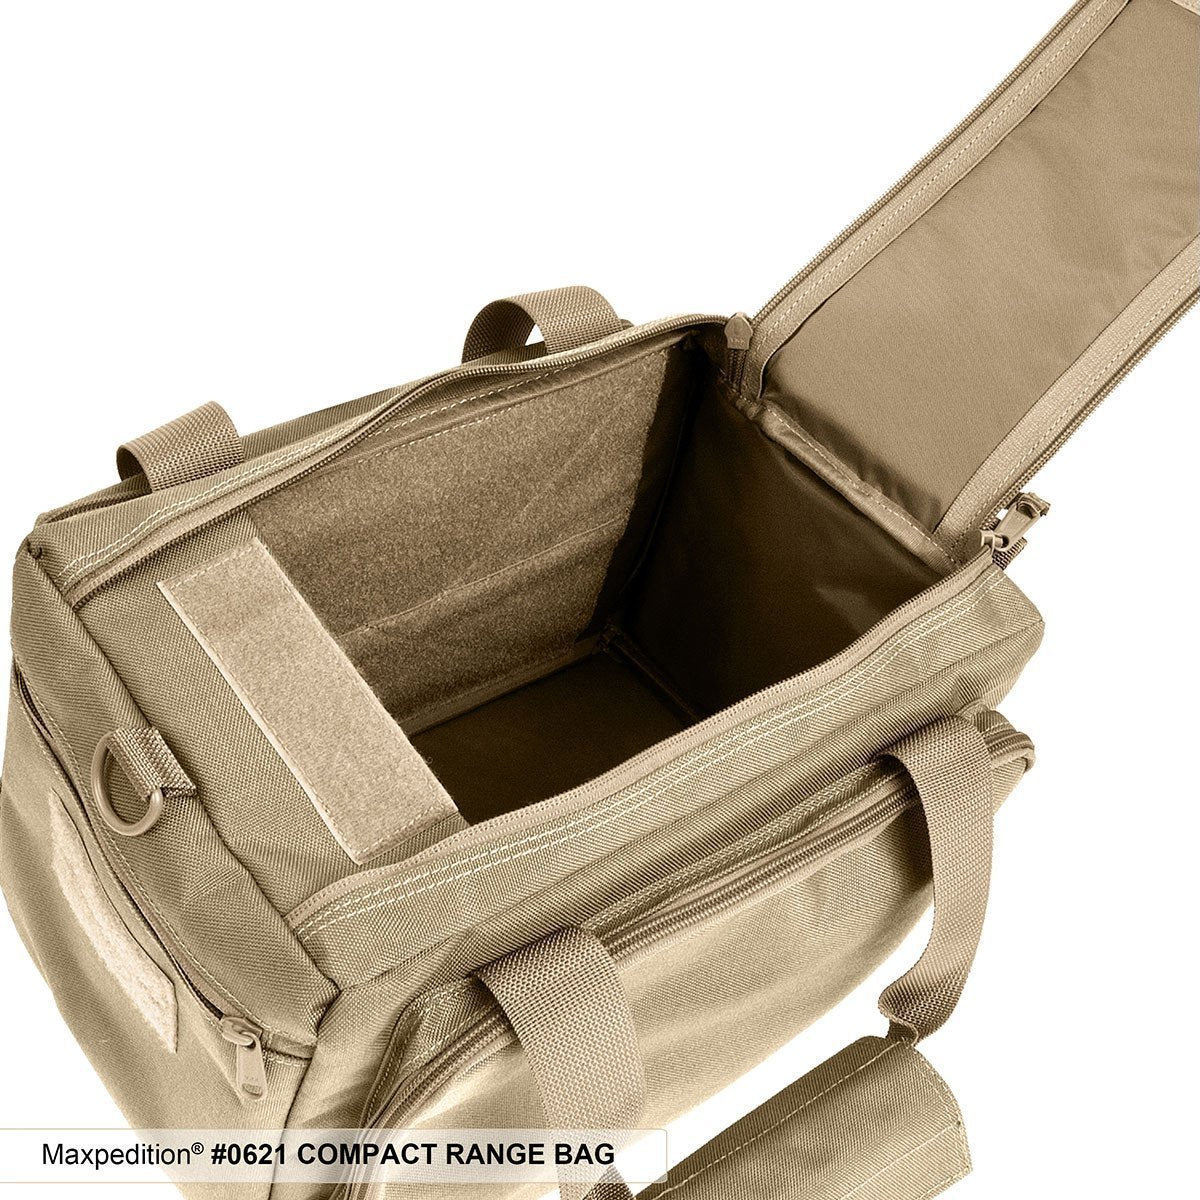 Maxpedition Compact Range Bag Bags, Packs and Cases Maxpedition Tactical Gear Supplier Tactical Distributors Australia